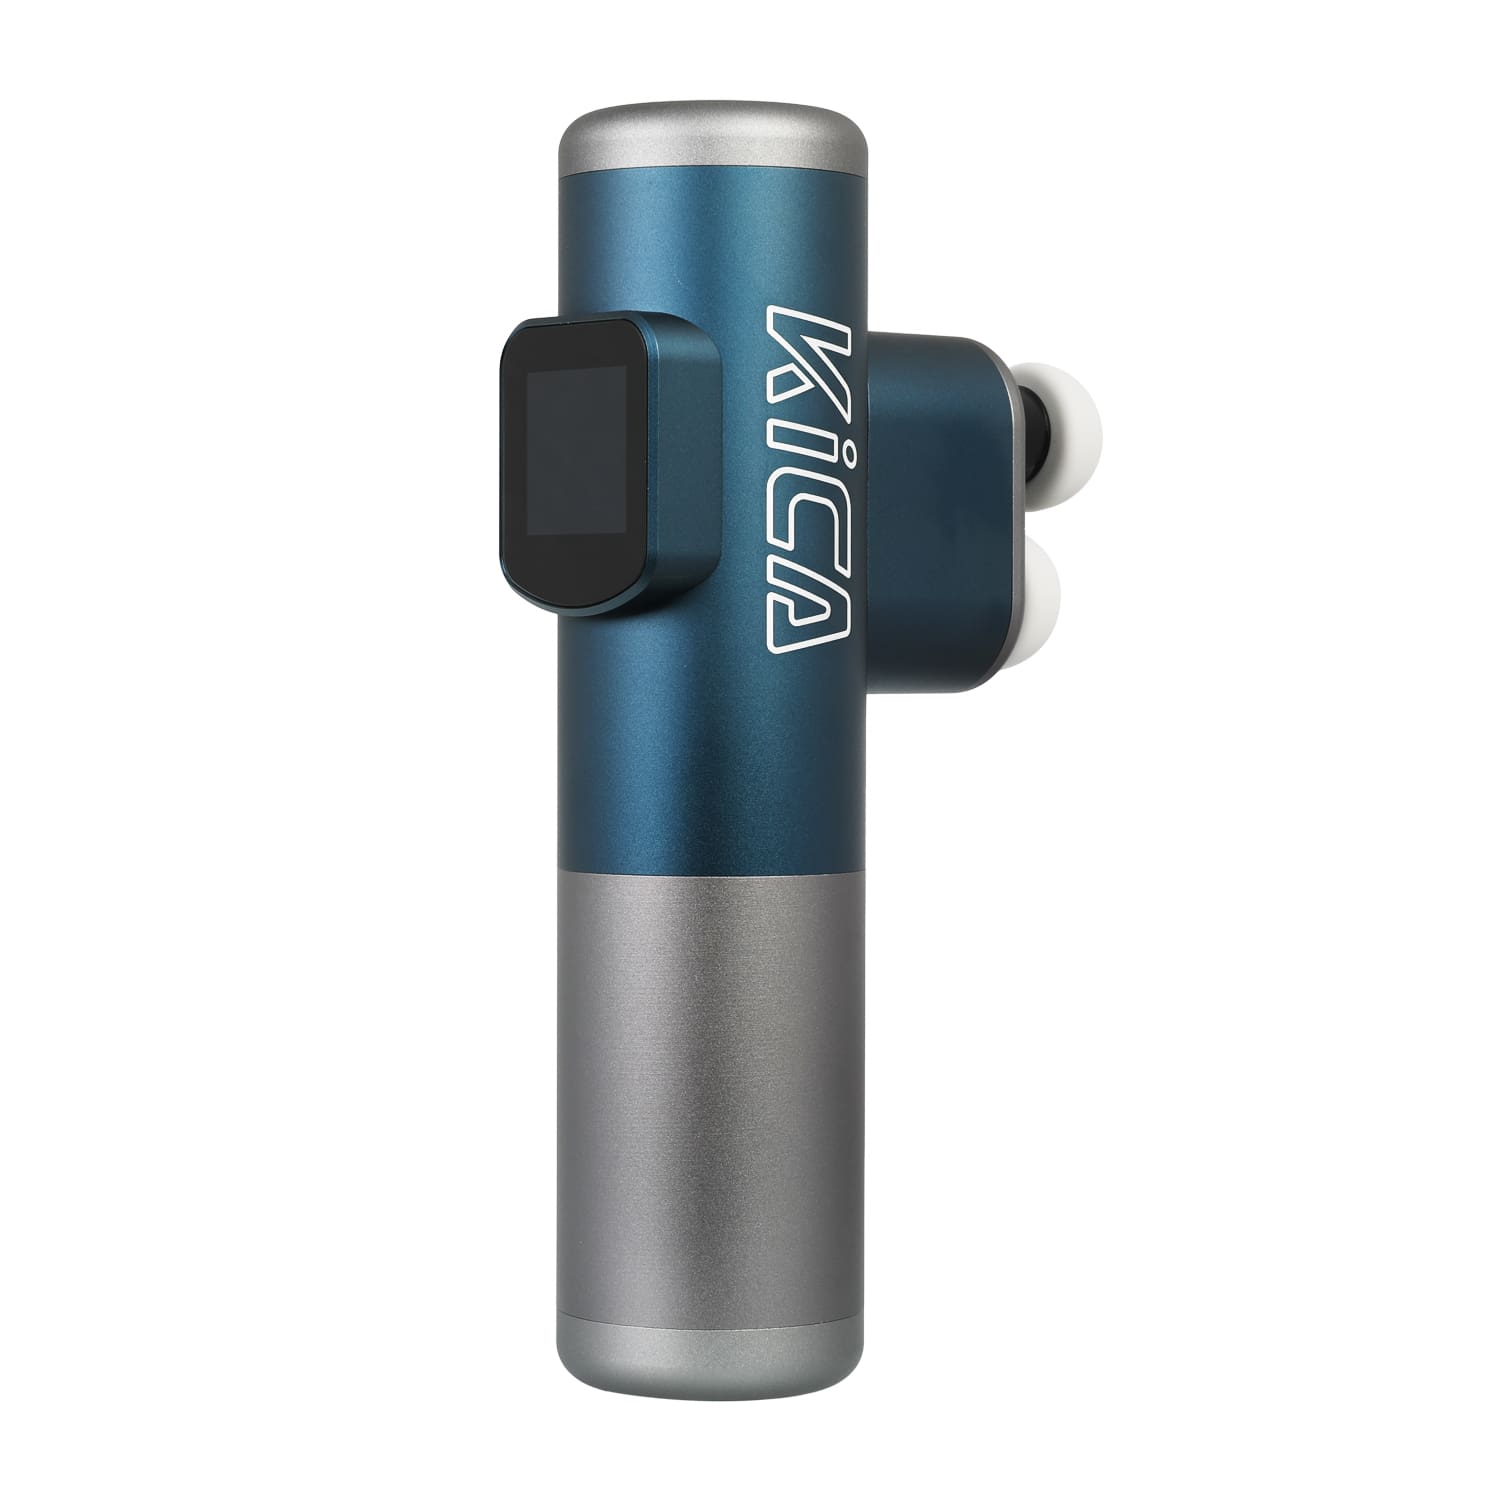 KiCA Pro Doppelkopf-Massagepistole Deep Tissue Percussion Muscle Massage Gun mit größerem OLED-Touchscreen 